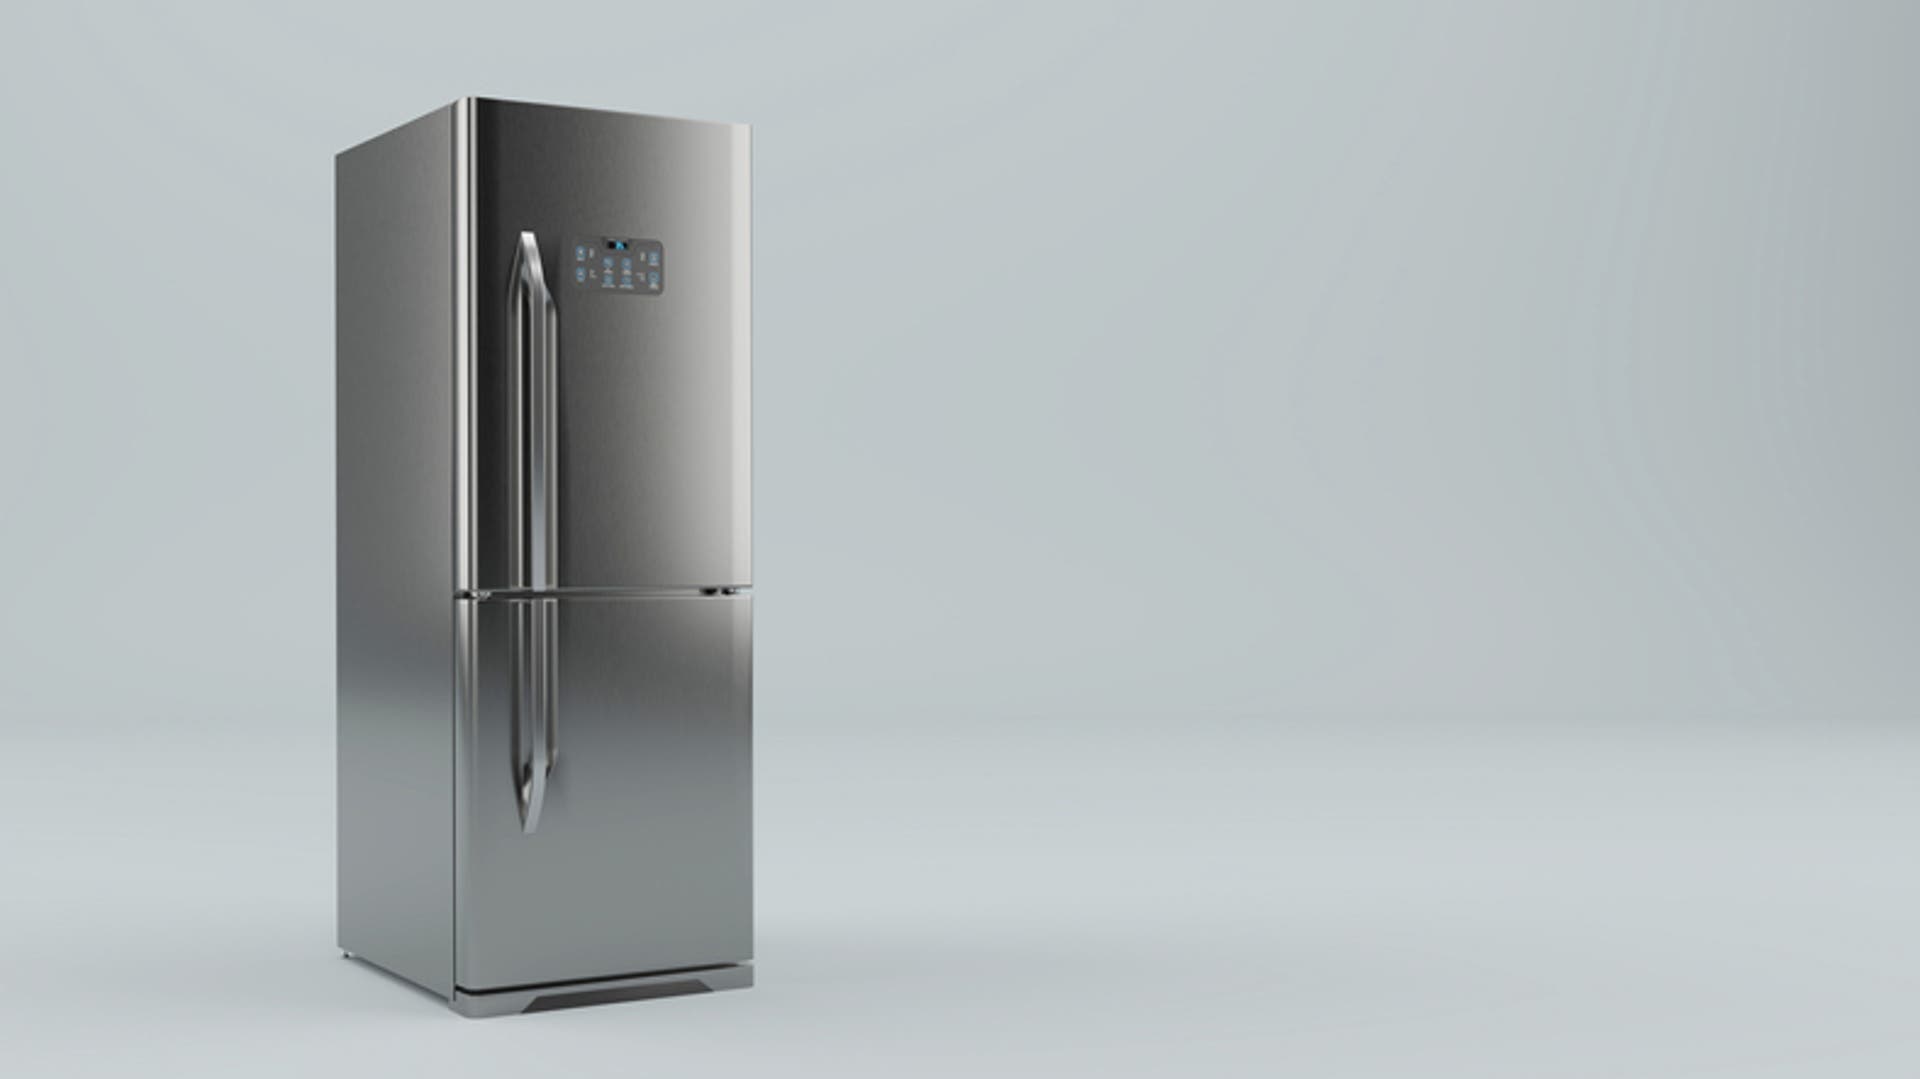  Modern stainless Fridge Refrigerator freezer on a gray background, mockup layout banner 